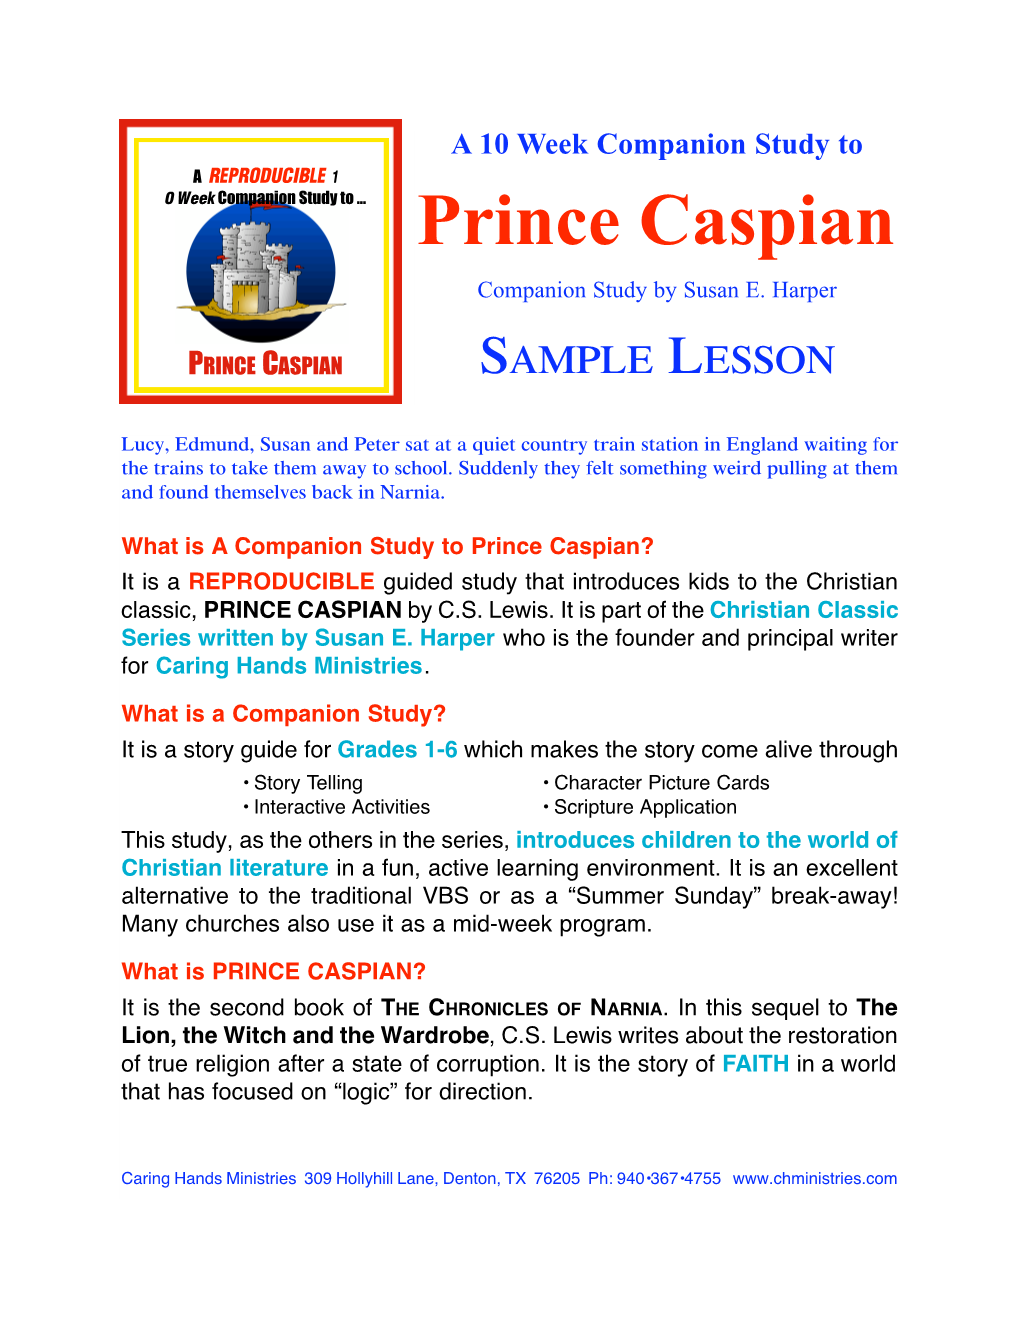 Prince Caspian Companion Study by Susan E